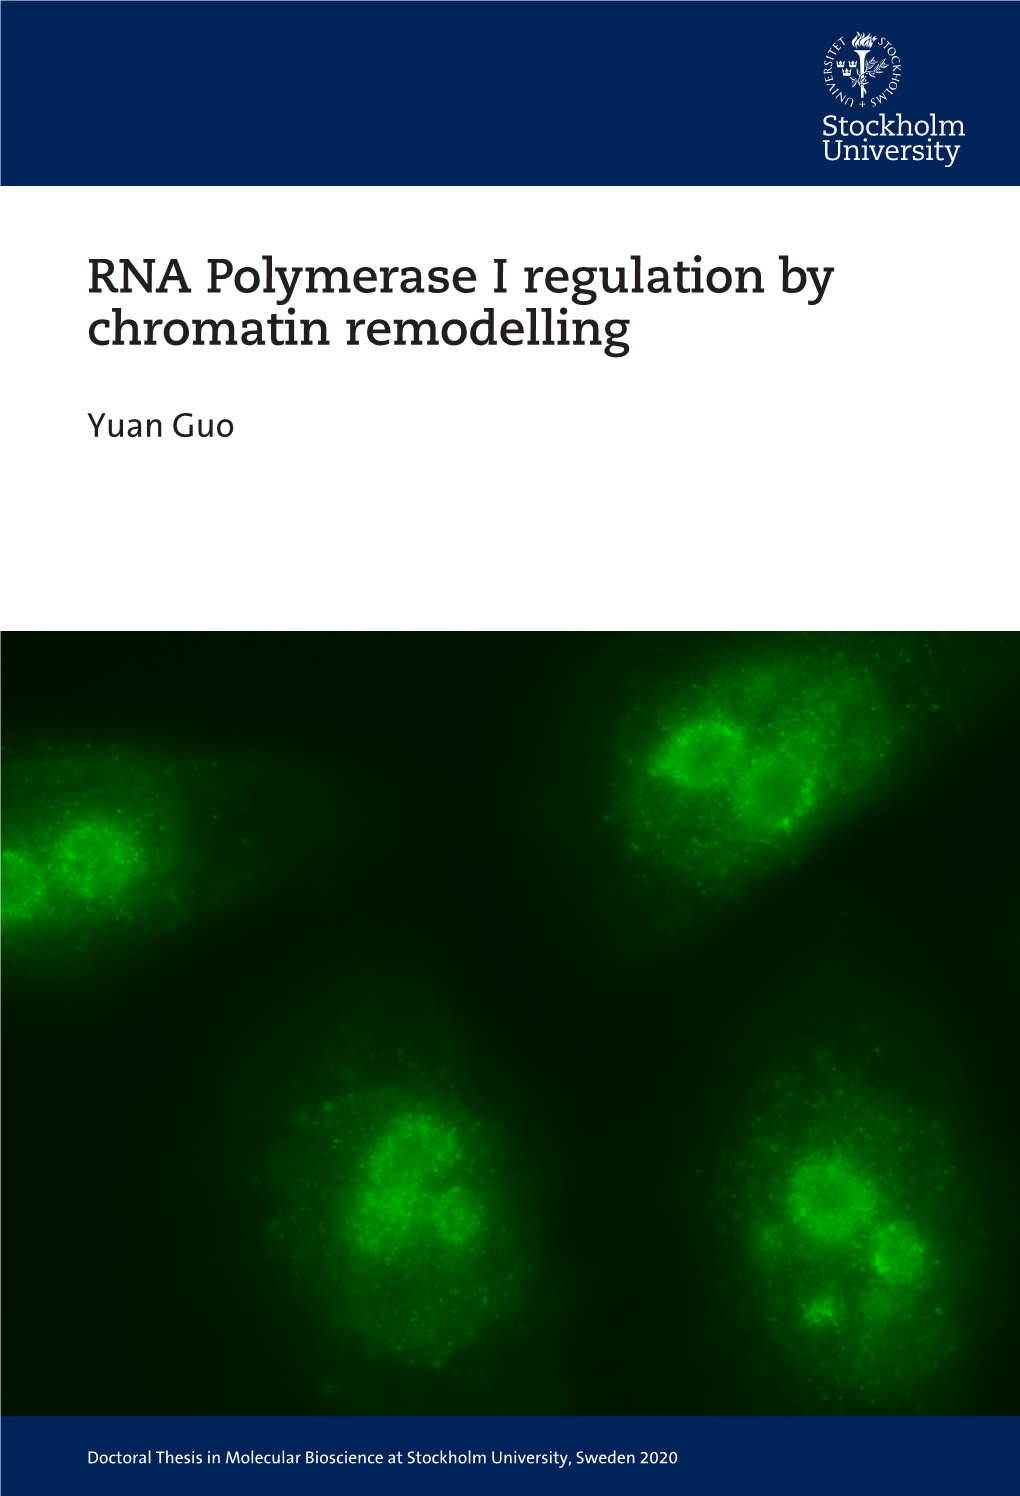 RNA Polymerase I Regulation by Chromatin Remodelling RNA Polymerase I Regulation by Chromatin Remodelling Yuan Guo